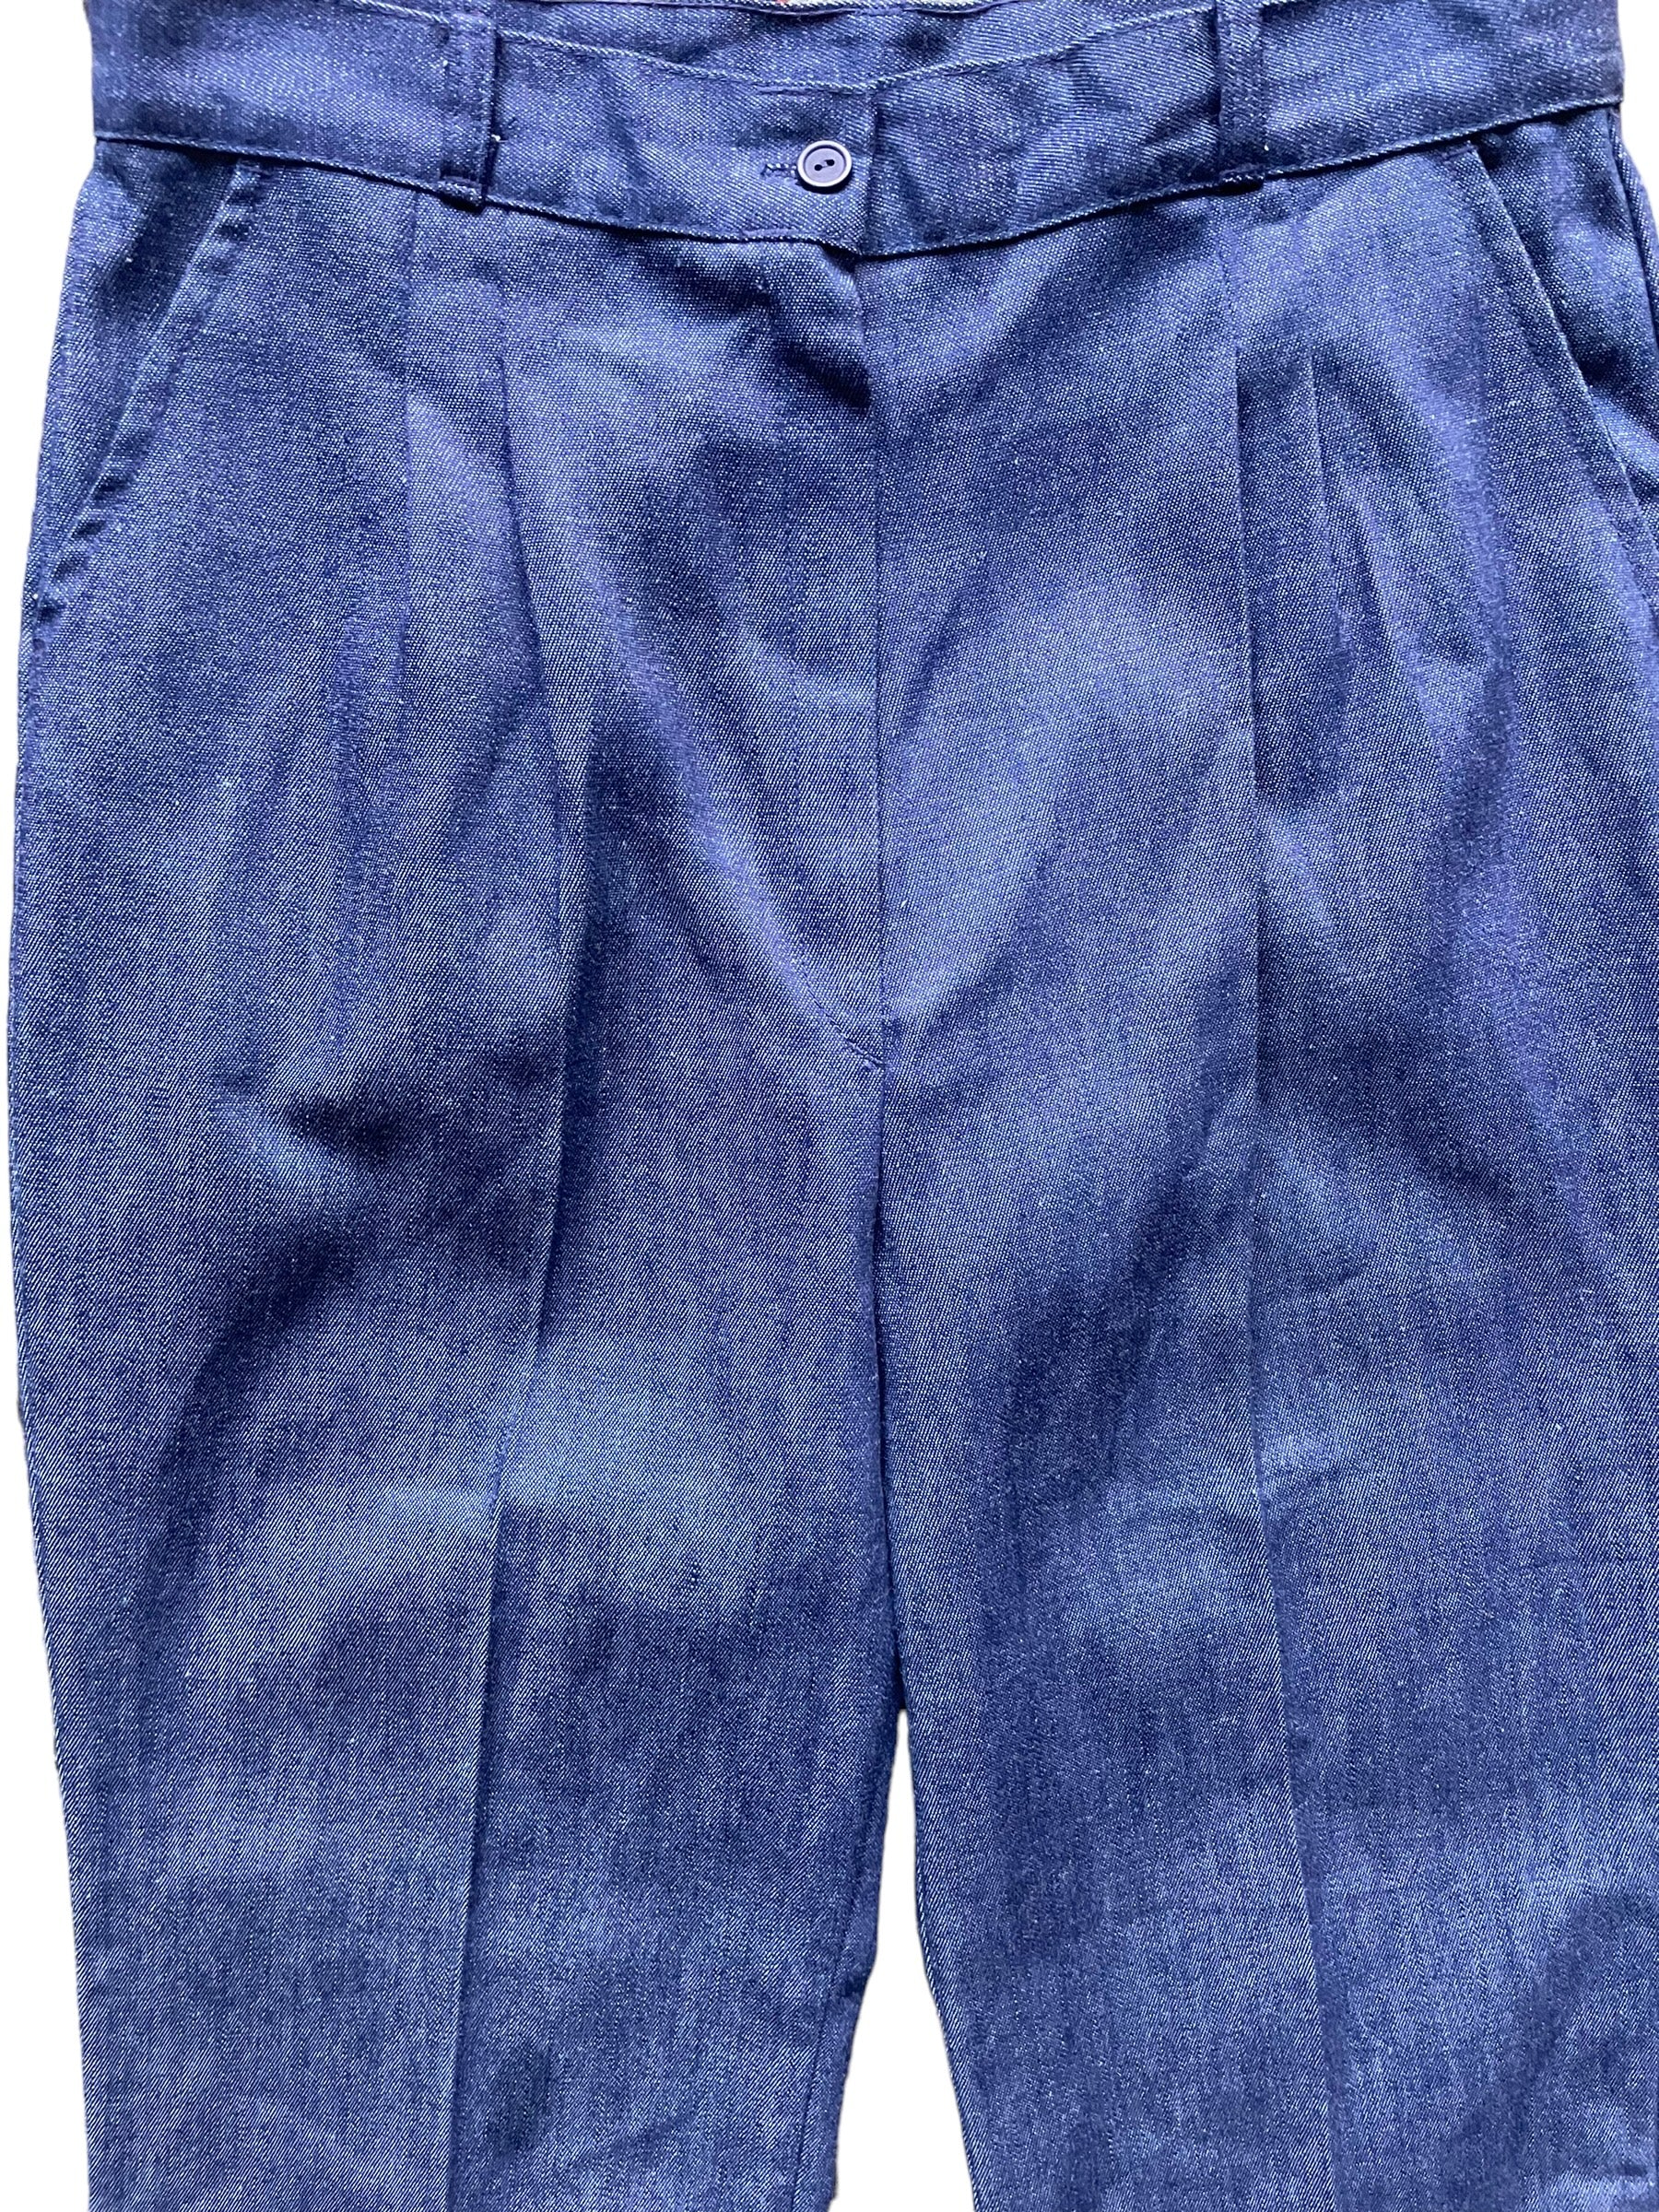 Front waist view of Vintage 1970s Mork and Mindy Denim Trousers W32 | Barn Owl Vintage Seattle | Vintage Denim